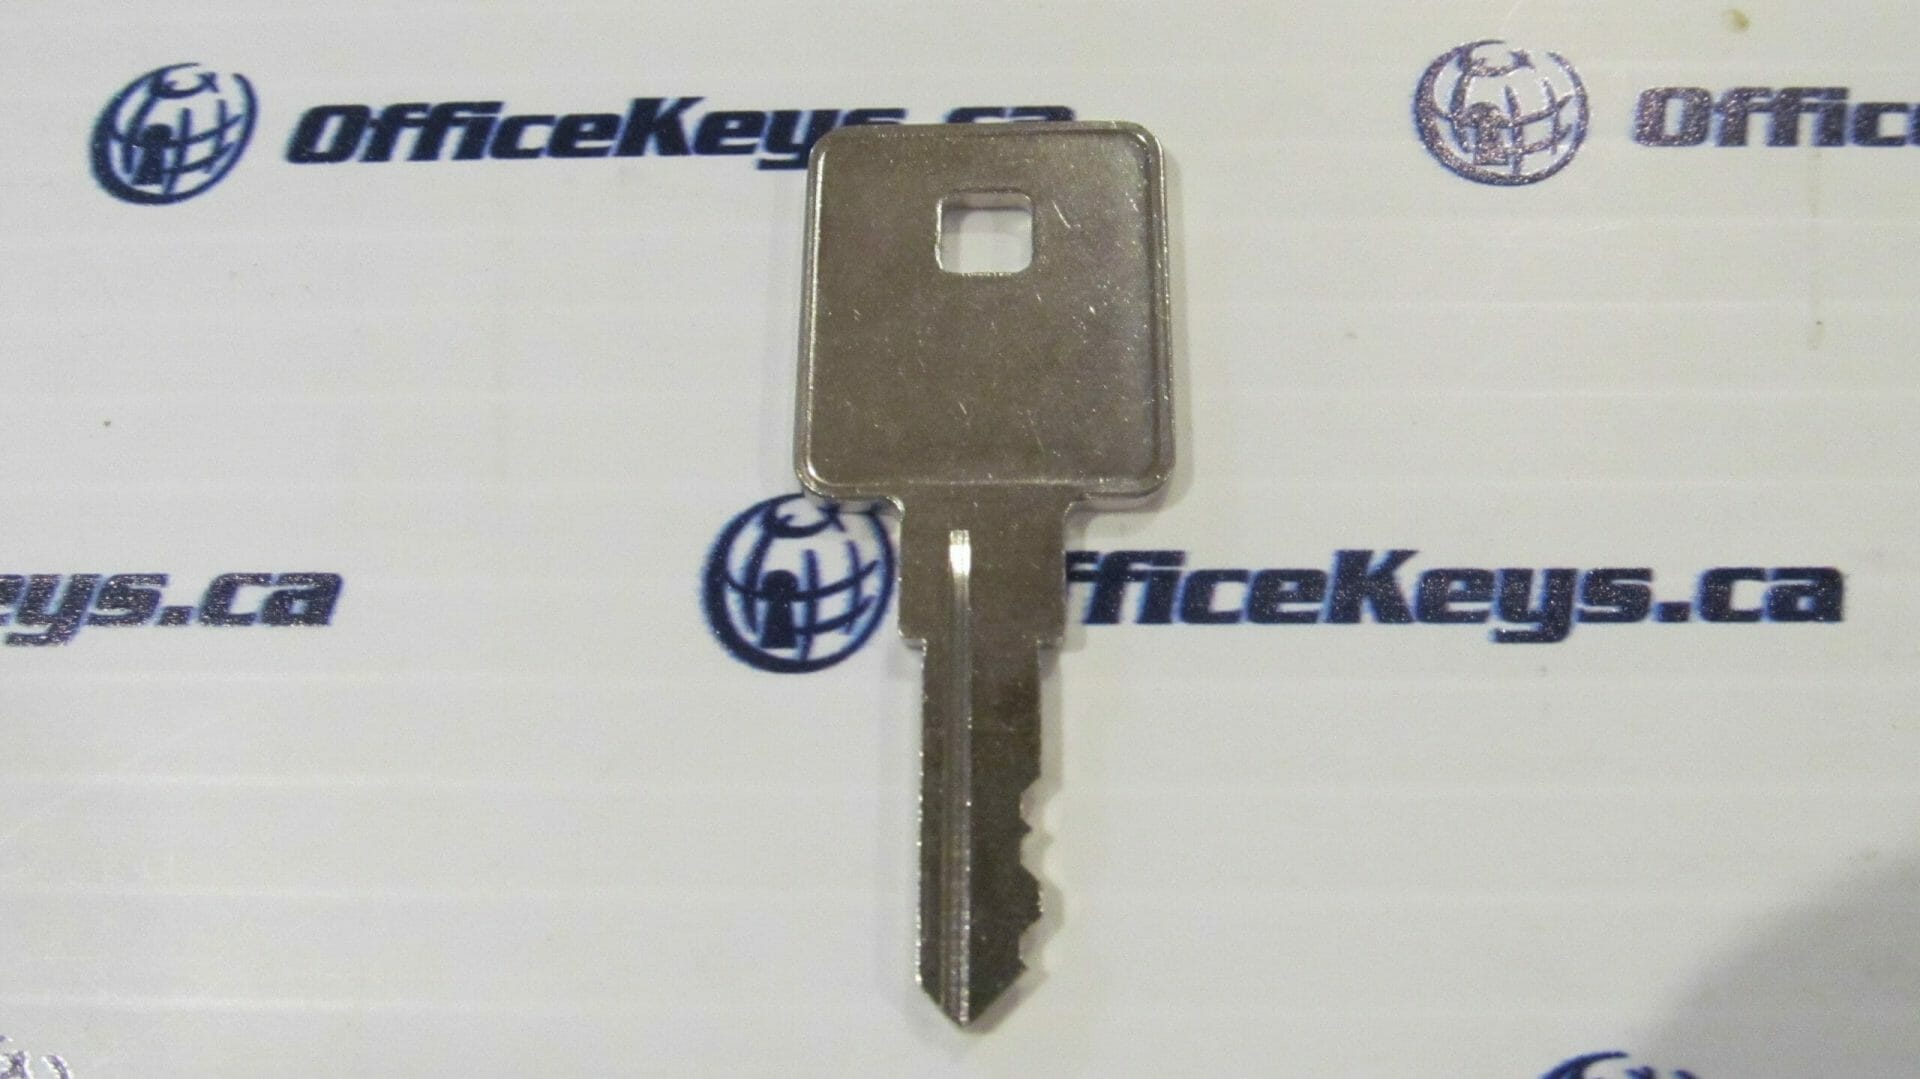 2 Trimark RV Lock Keys Pre Cut To Code TM200 KEY Licensed Locksmith. TM151